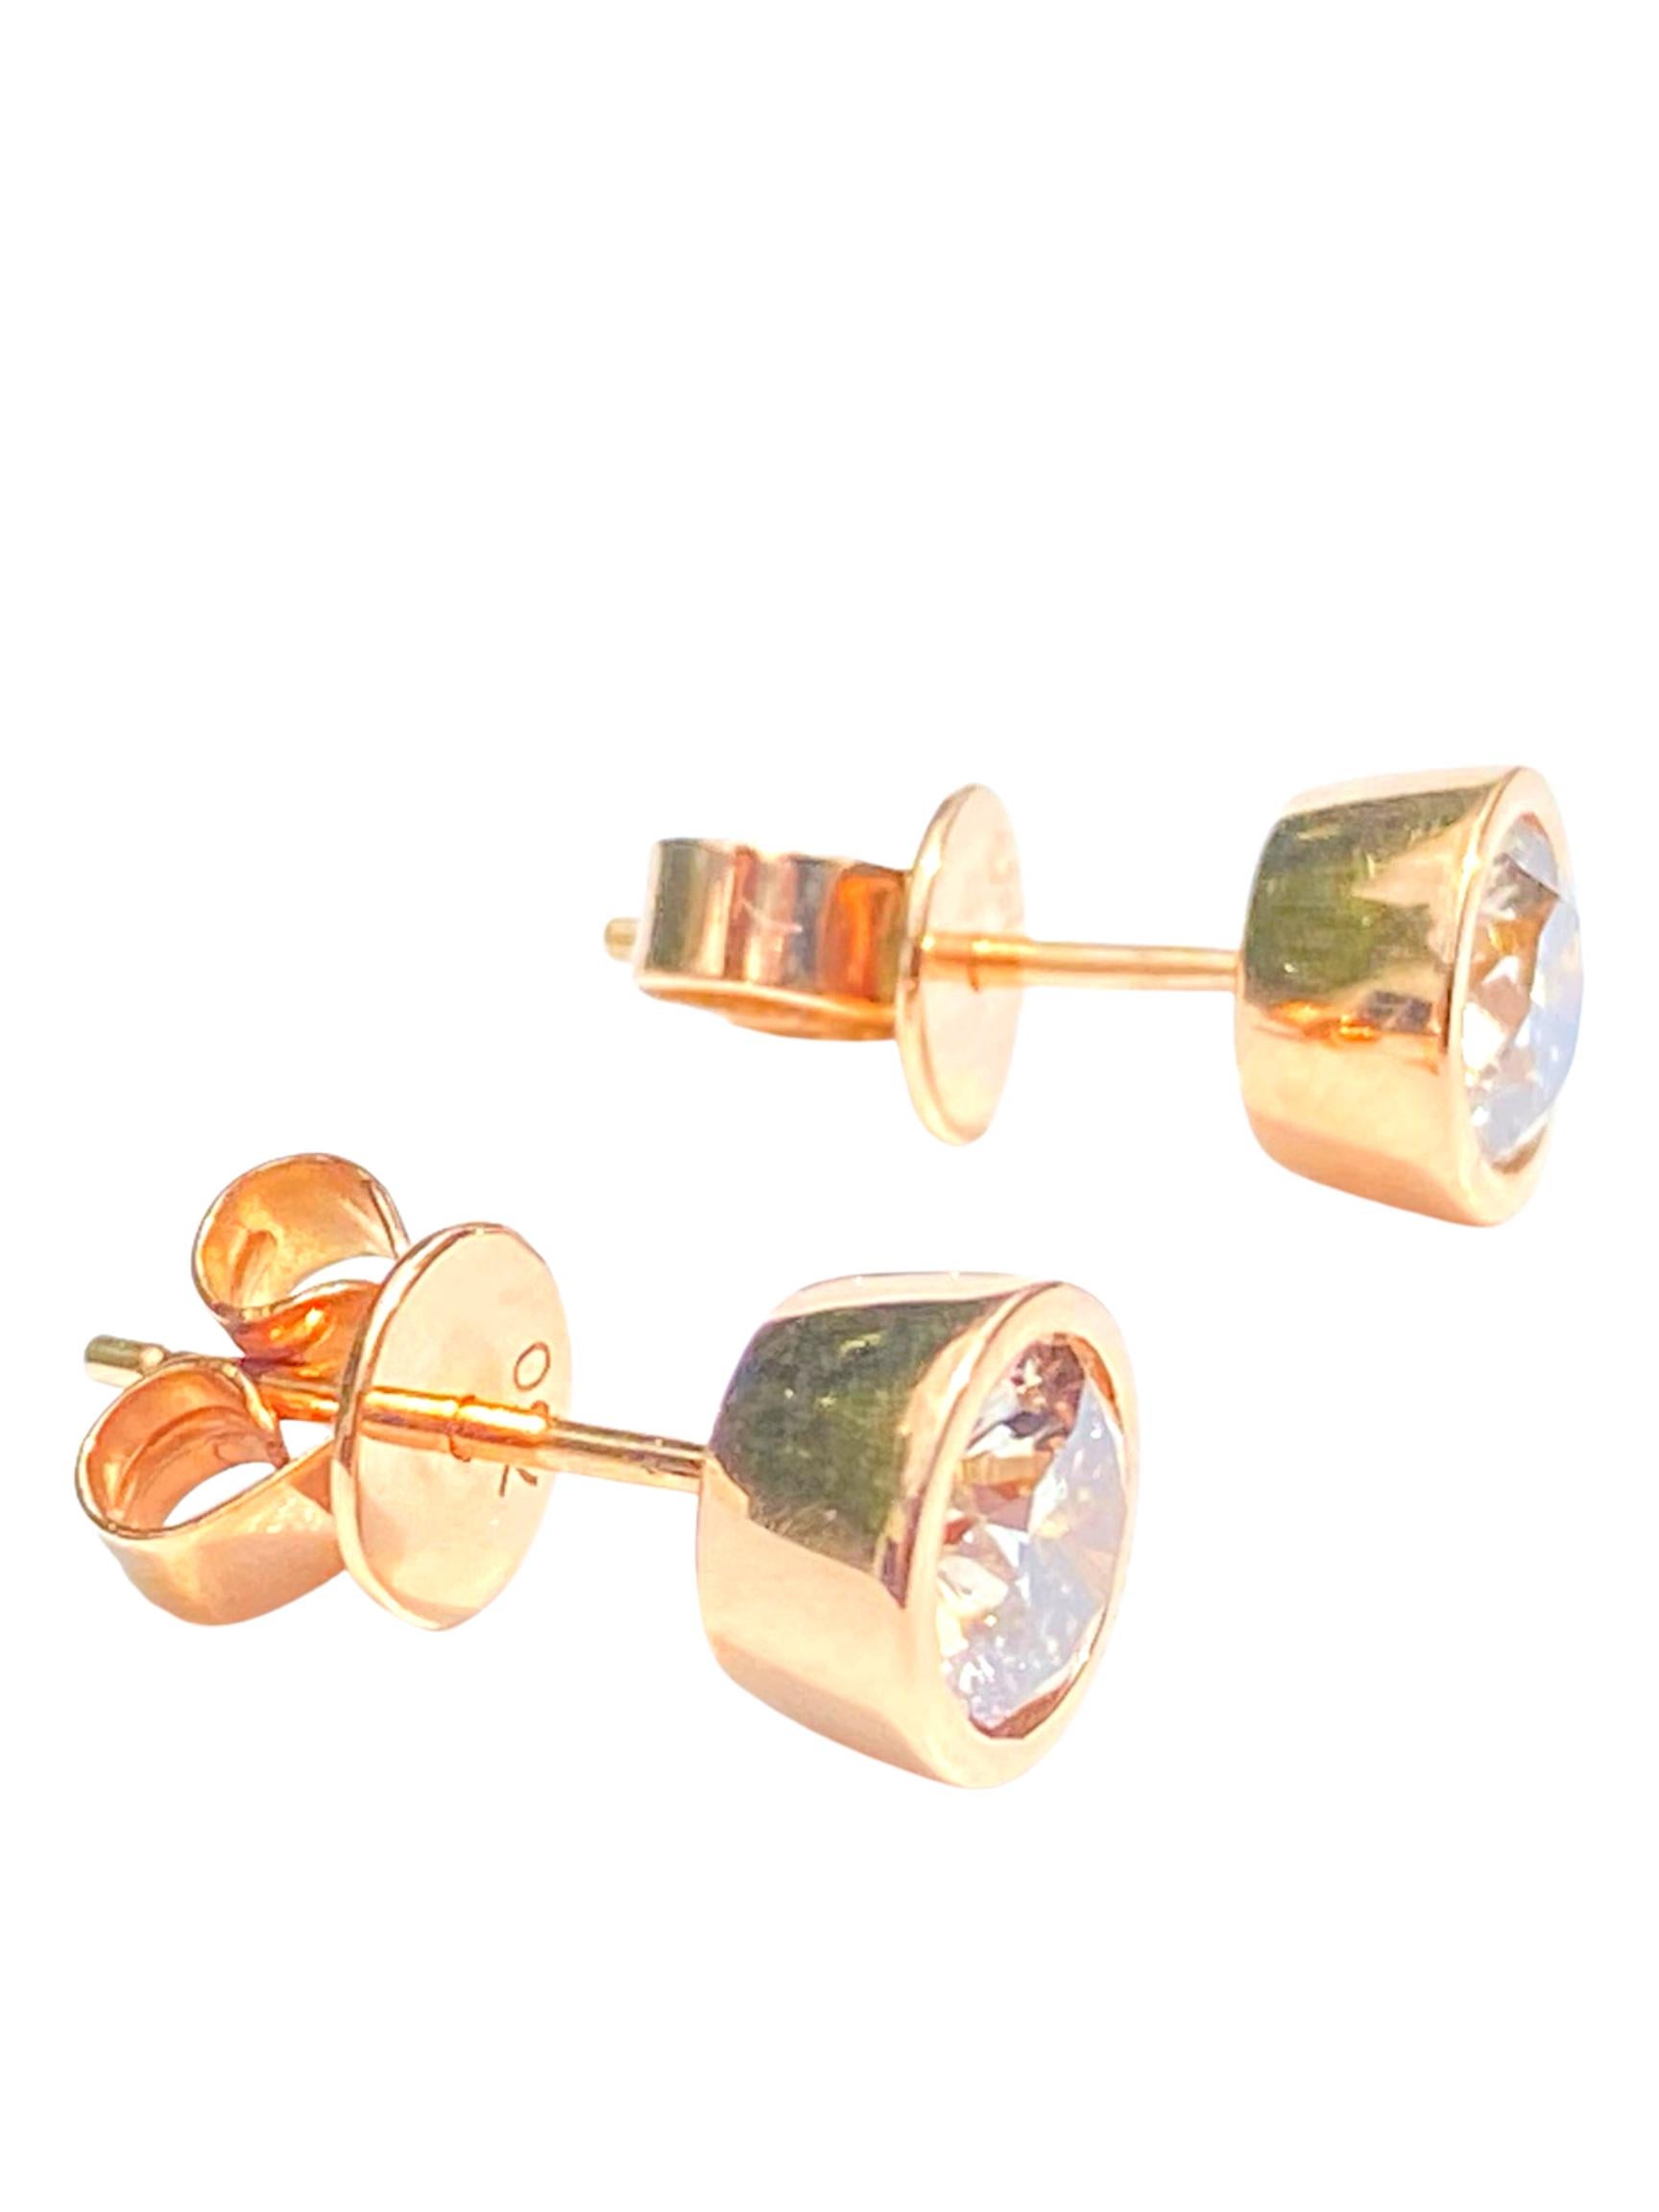 Round Cut 1.58 Carat Diamond and 18k Rose Gold Stud Earrings Round-Brilliant Cut Diamonds For Sale